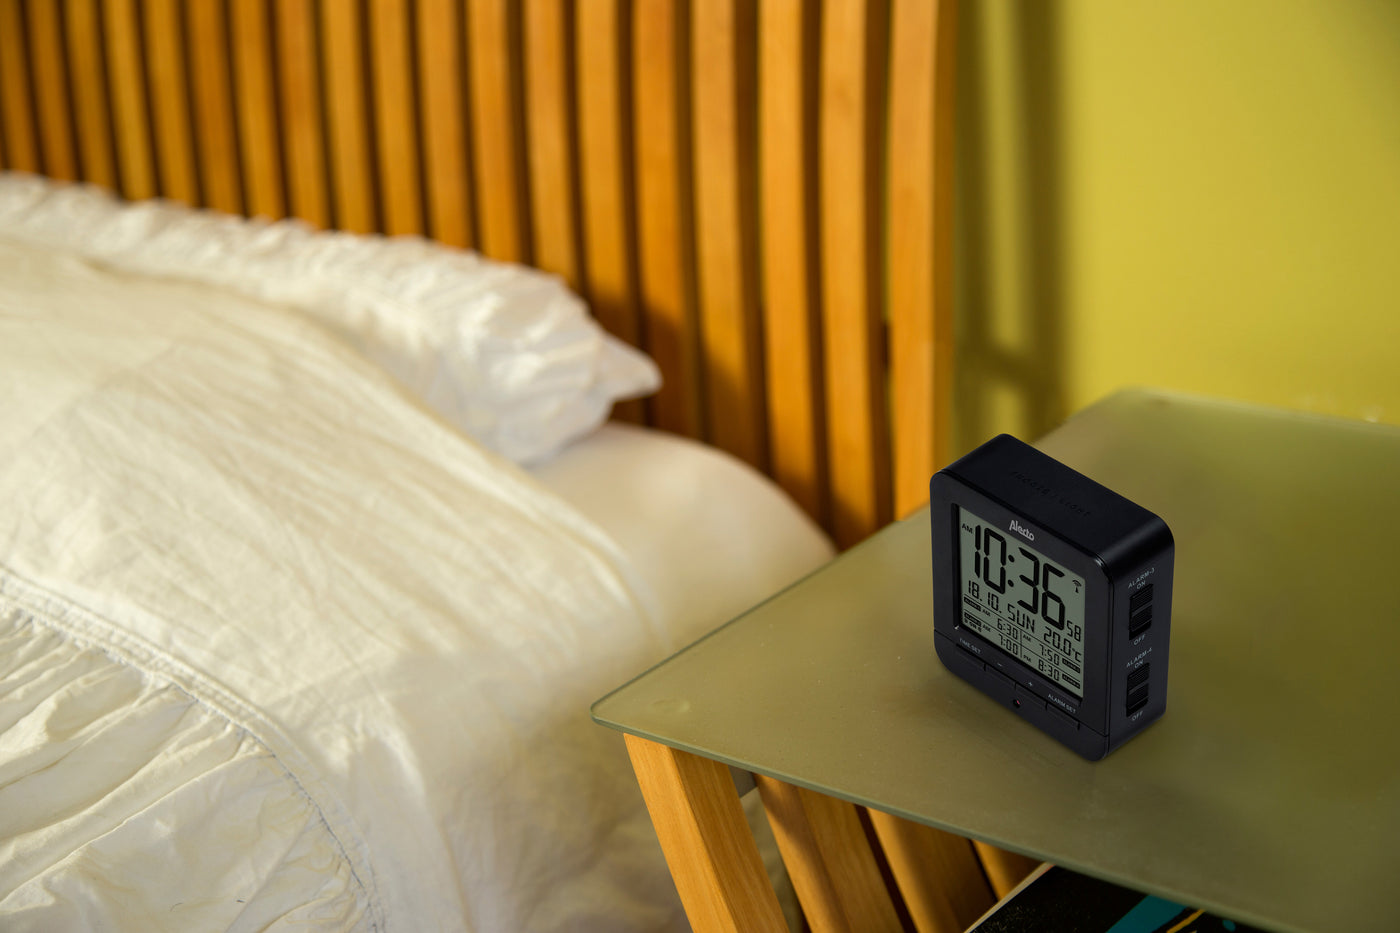 Alecto AK-20 - Digital alarm clock with thermometer, black